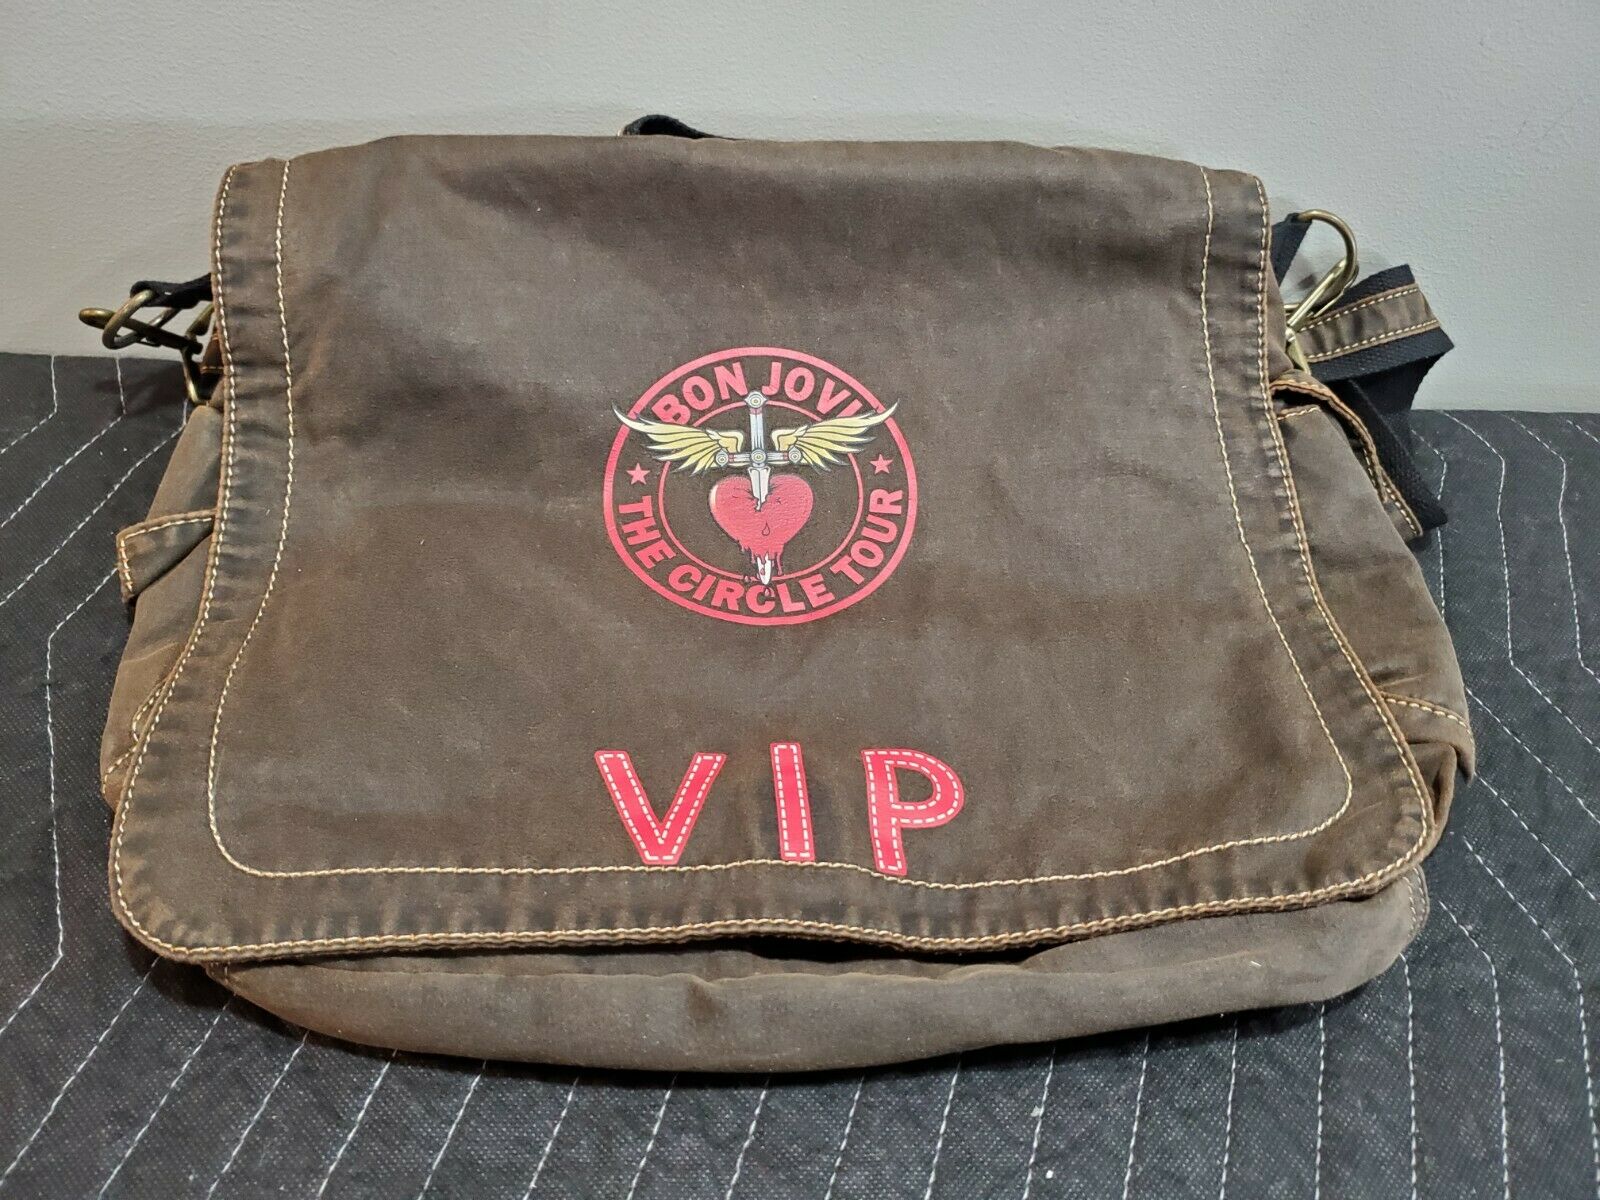 2012 Bon Jovi The Circle Tour Vip Brown Shoulder Bag Concert New Unused Beautifu